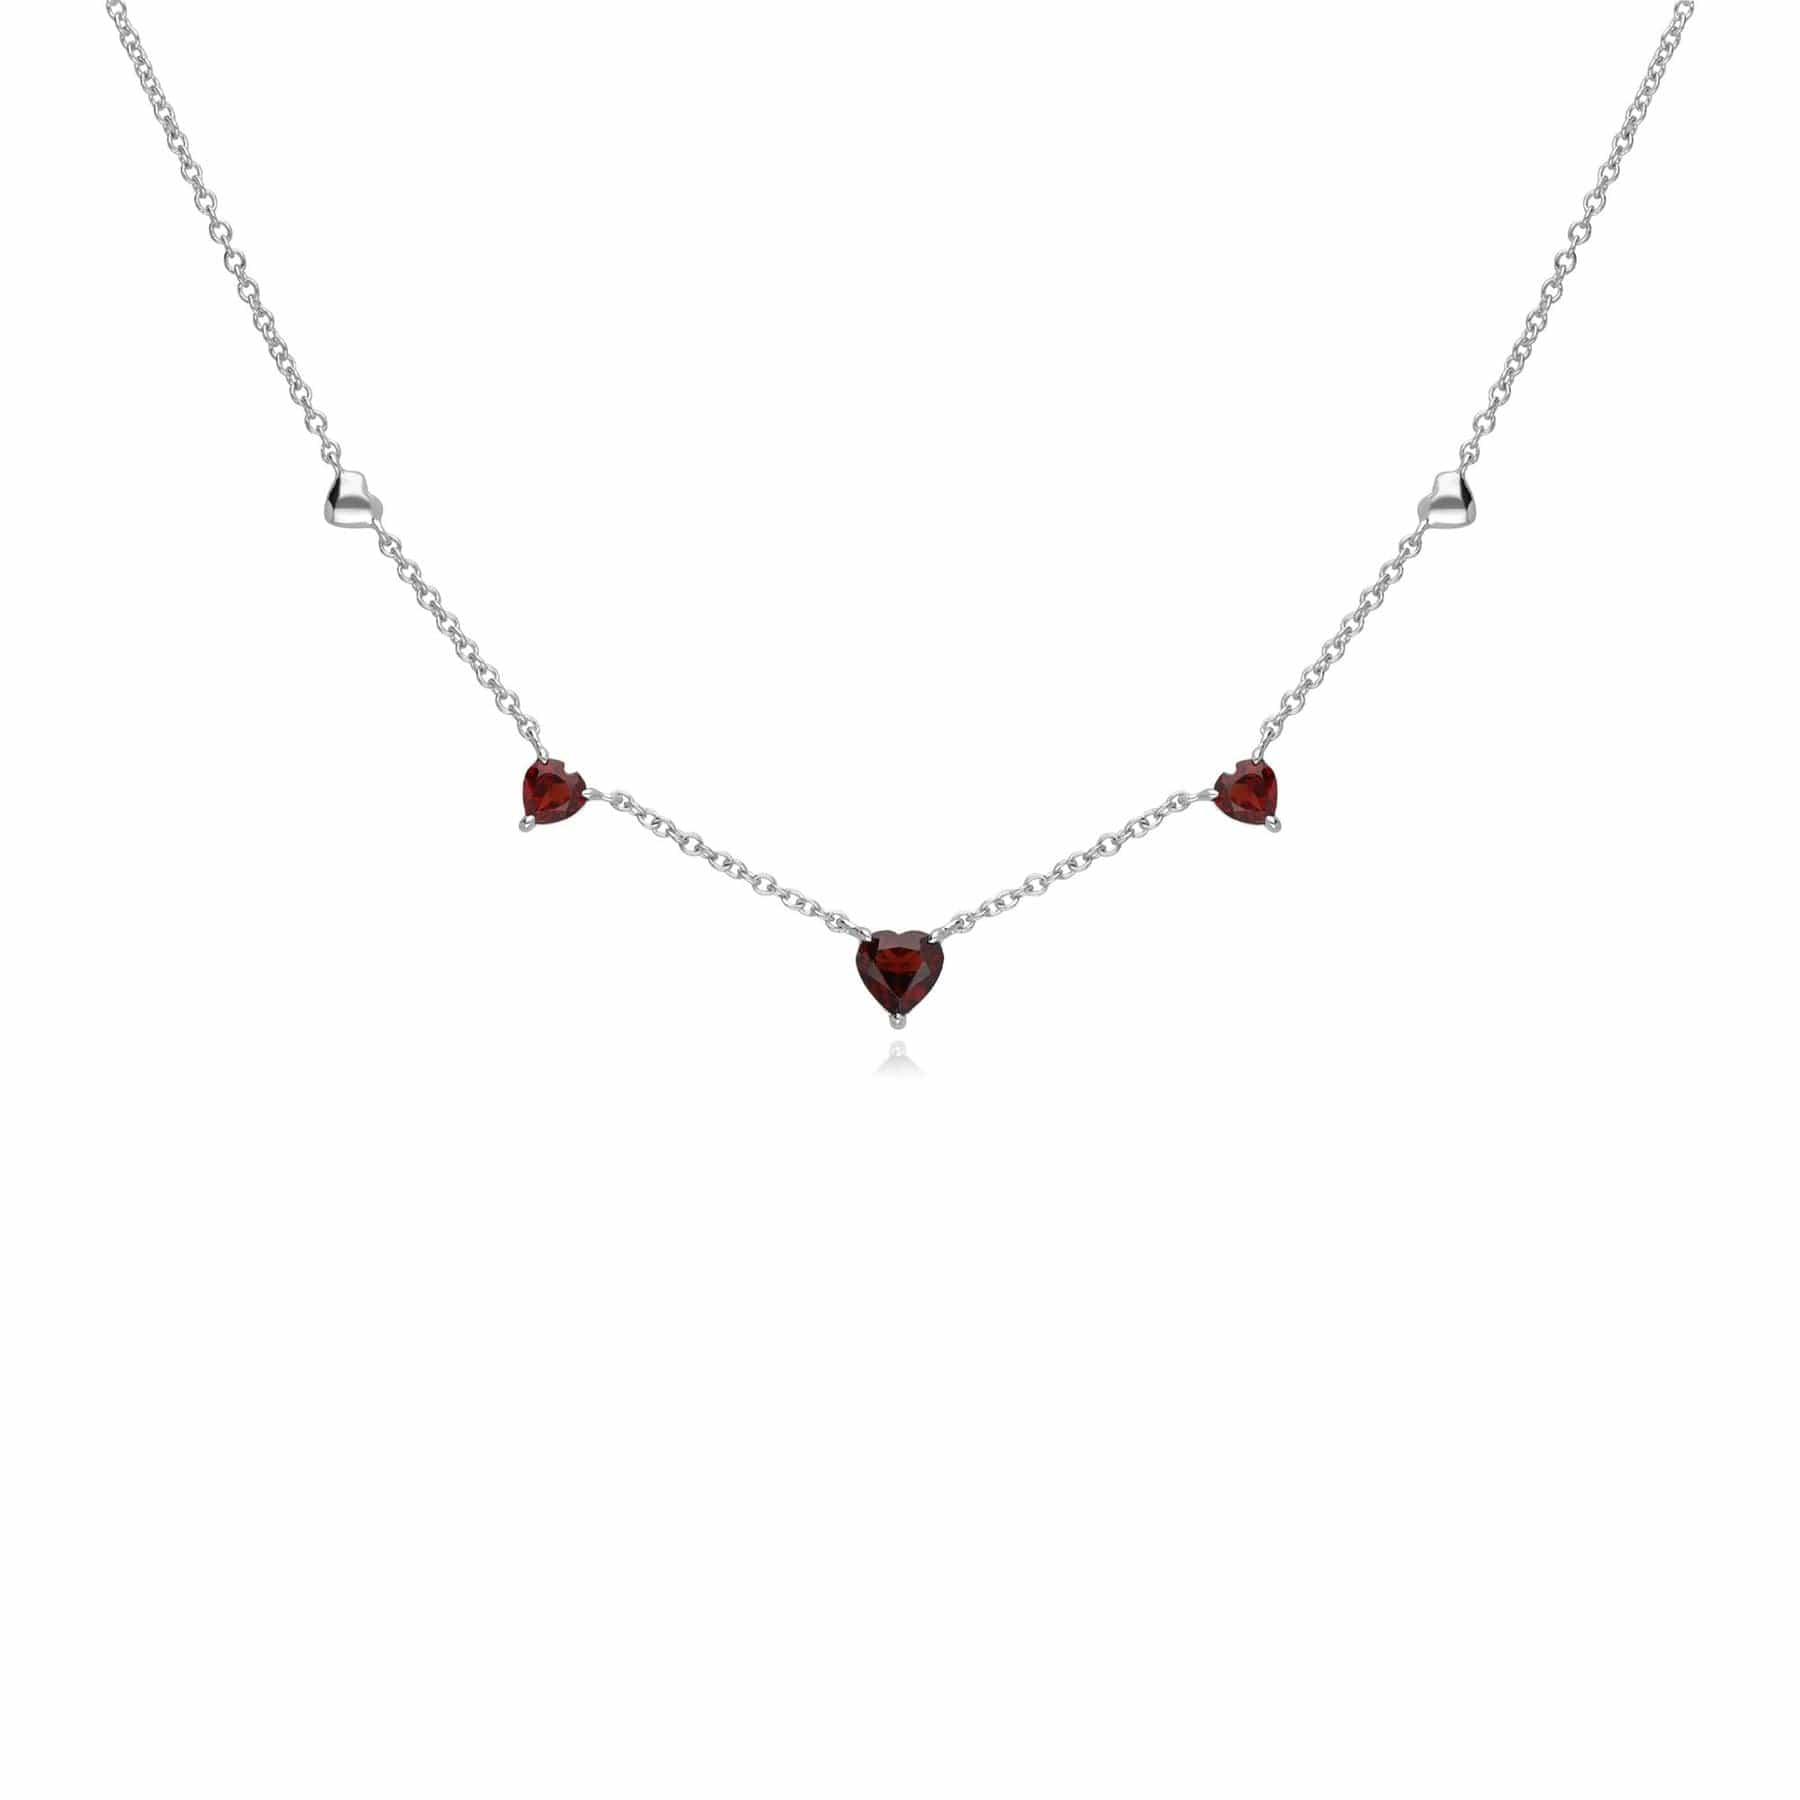 162N0038019 Garnet Heart Necklace in 9ct White Gold 1